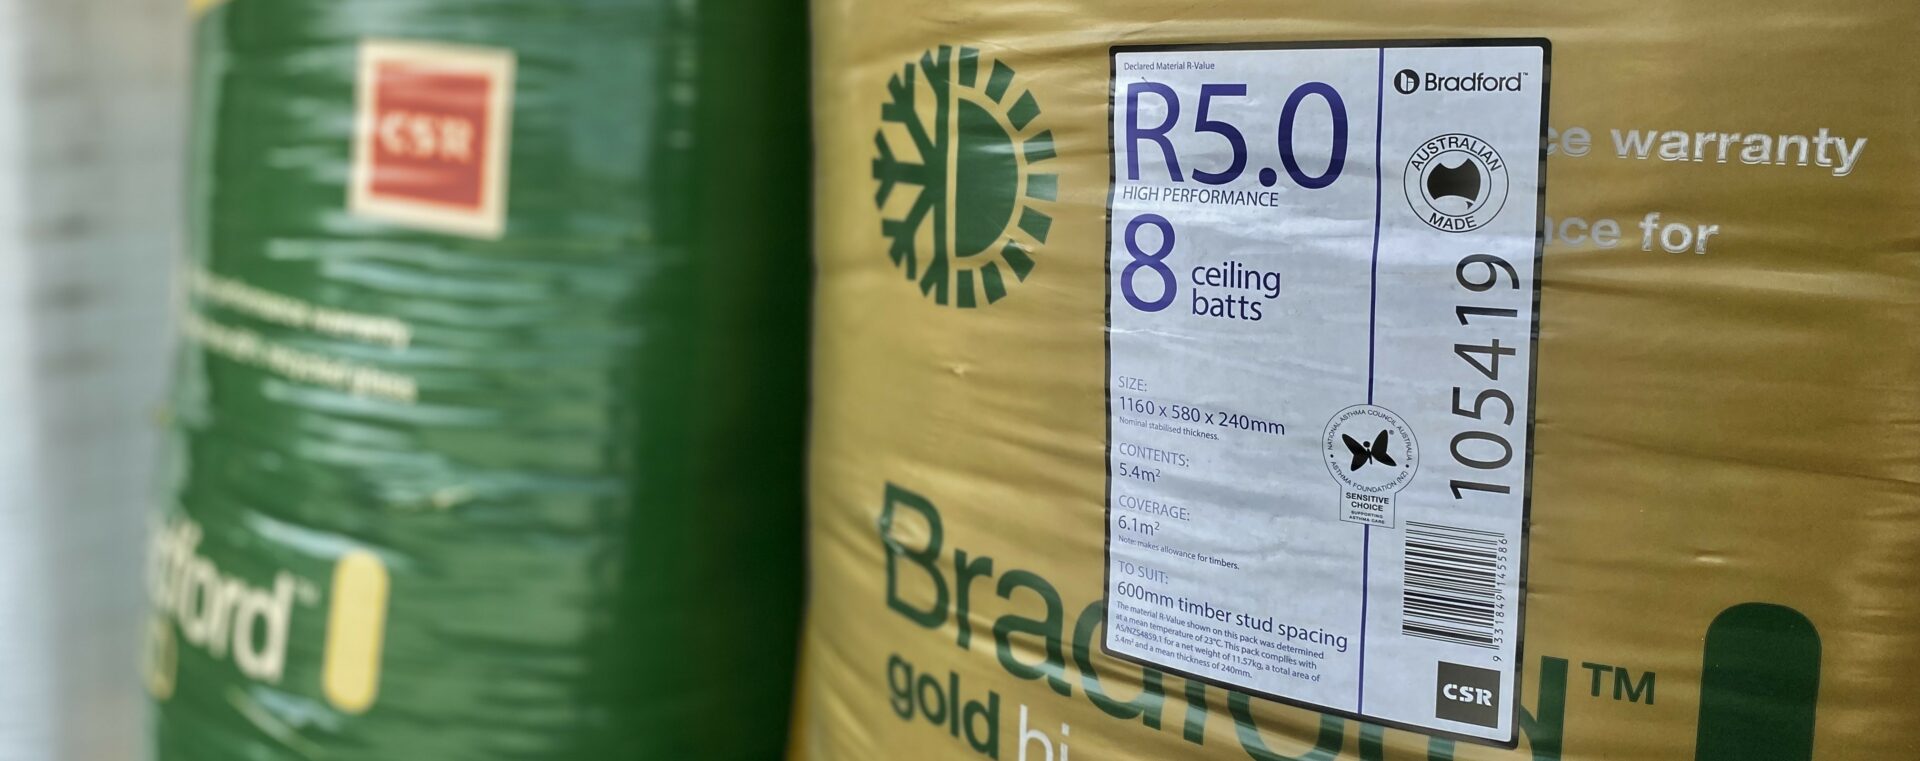 Bradford Gold Hi-Performance insulation batts ceiling R-value of R5.0